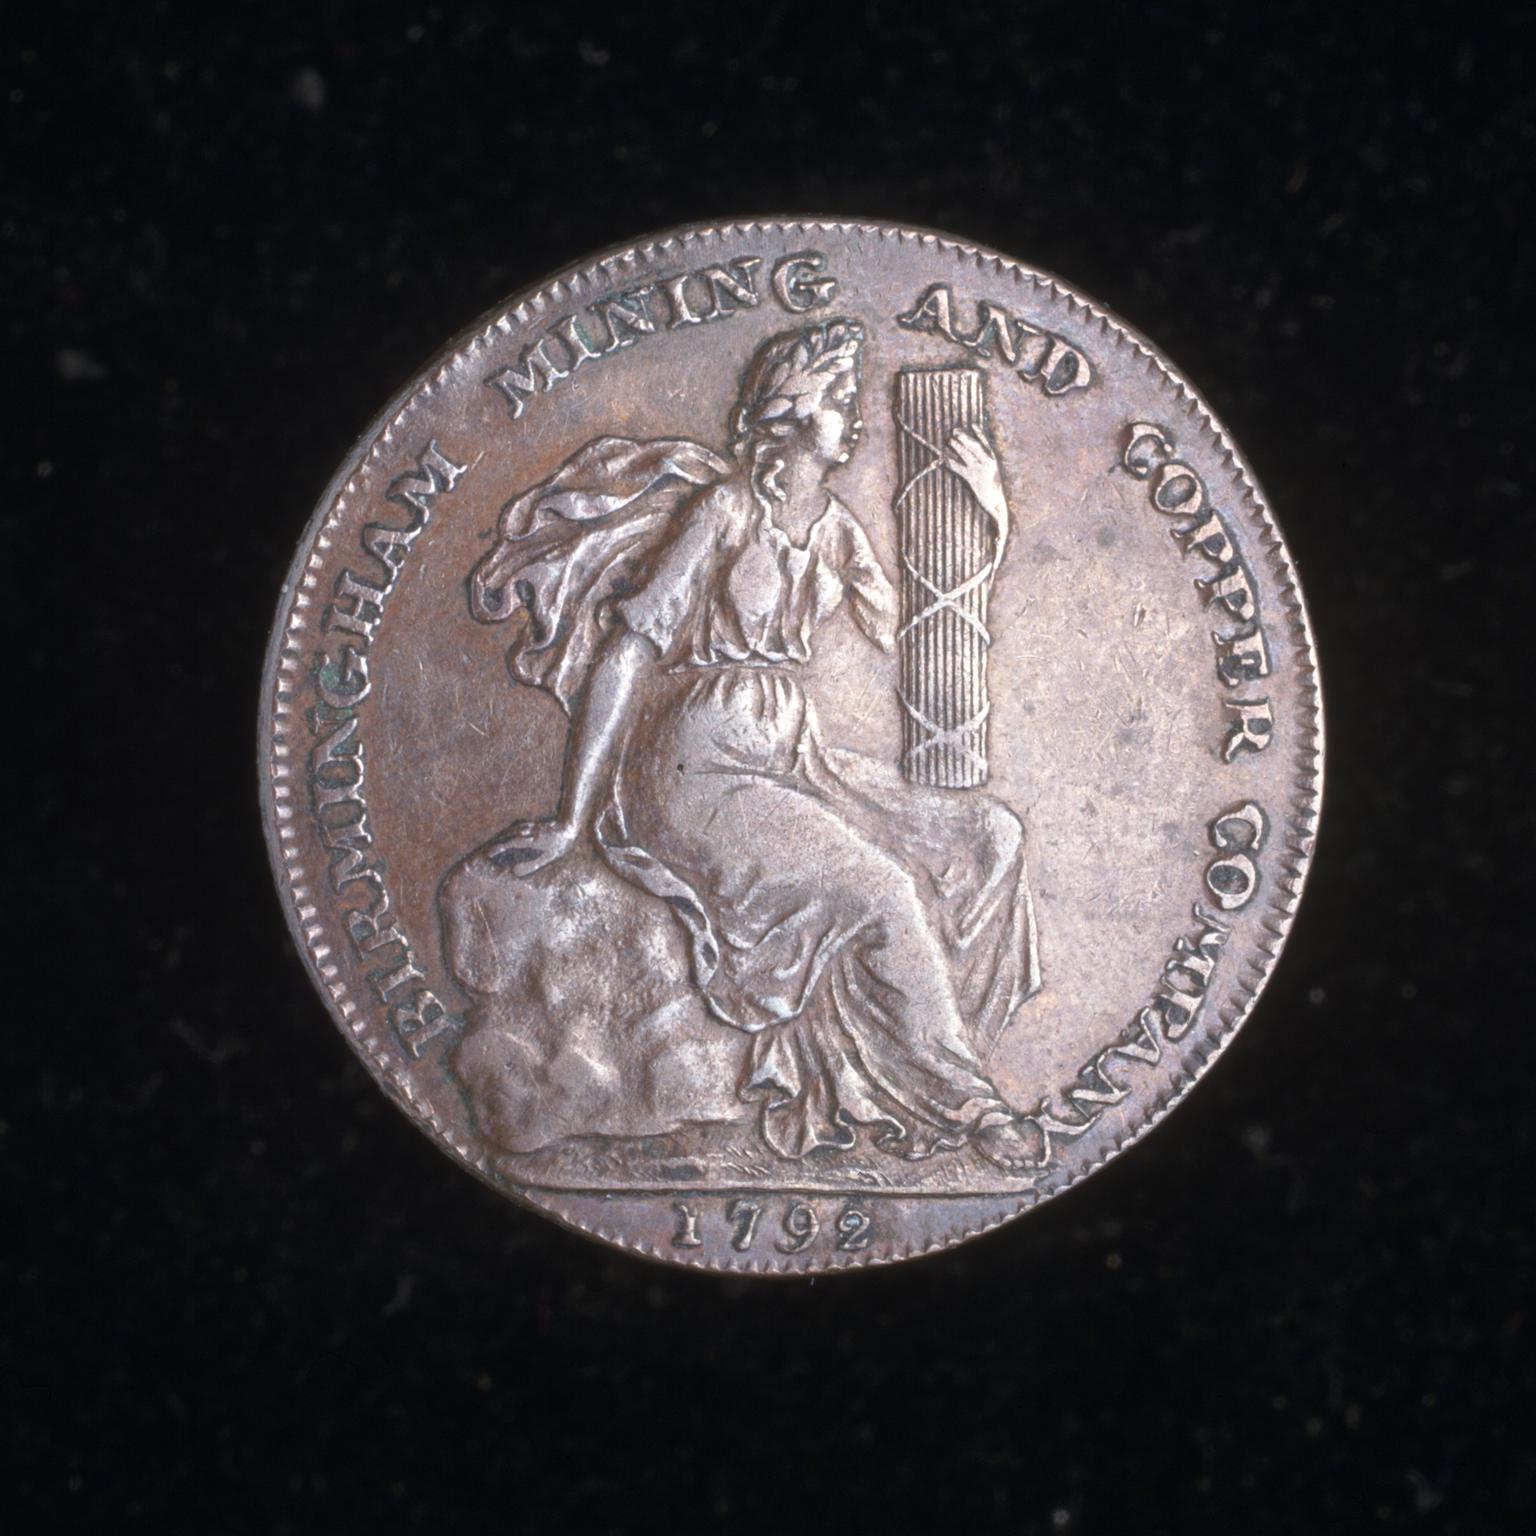 18th century token: Birmingham Mining & Copper Co.